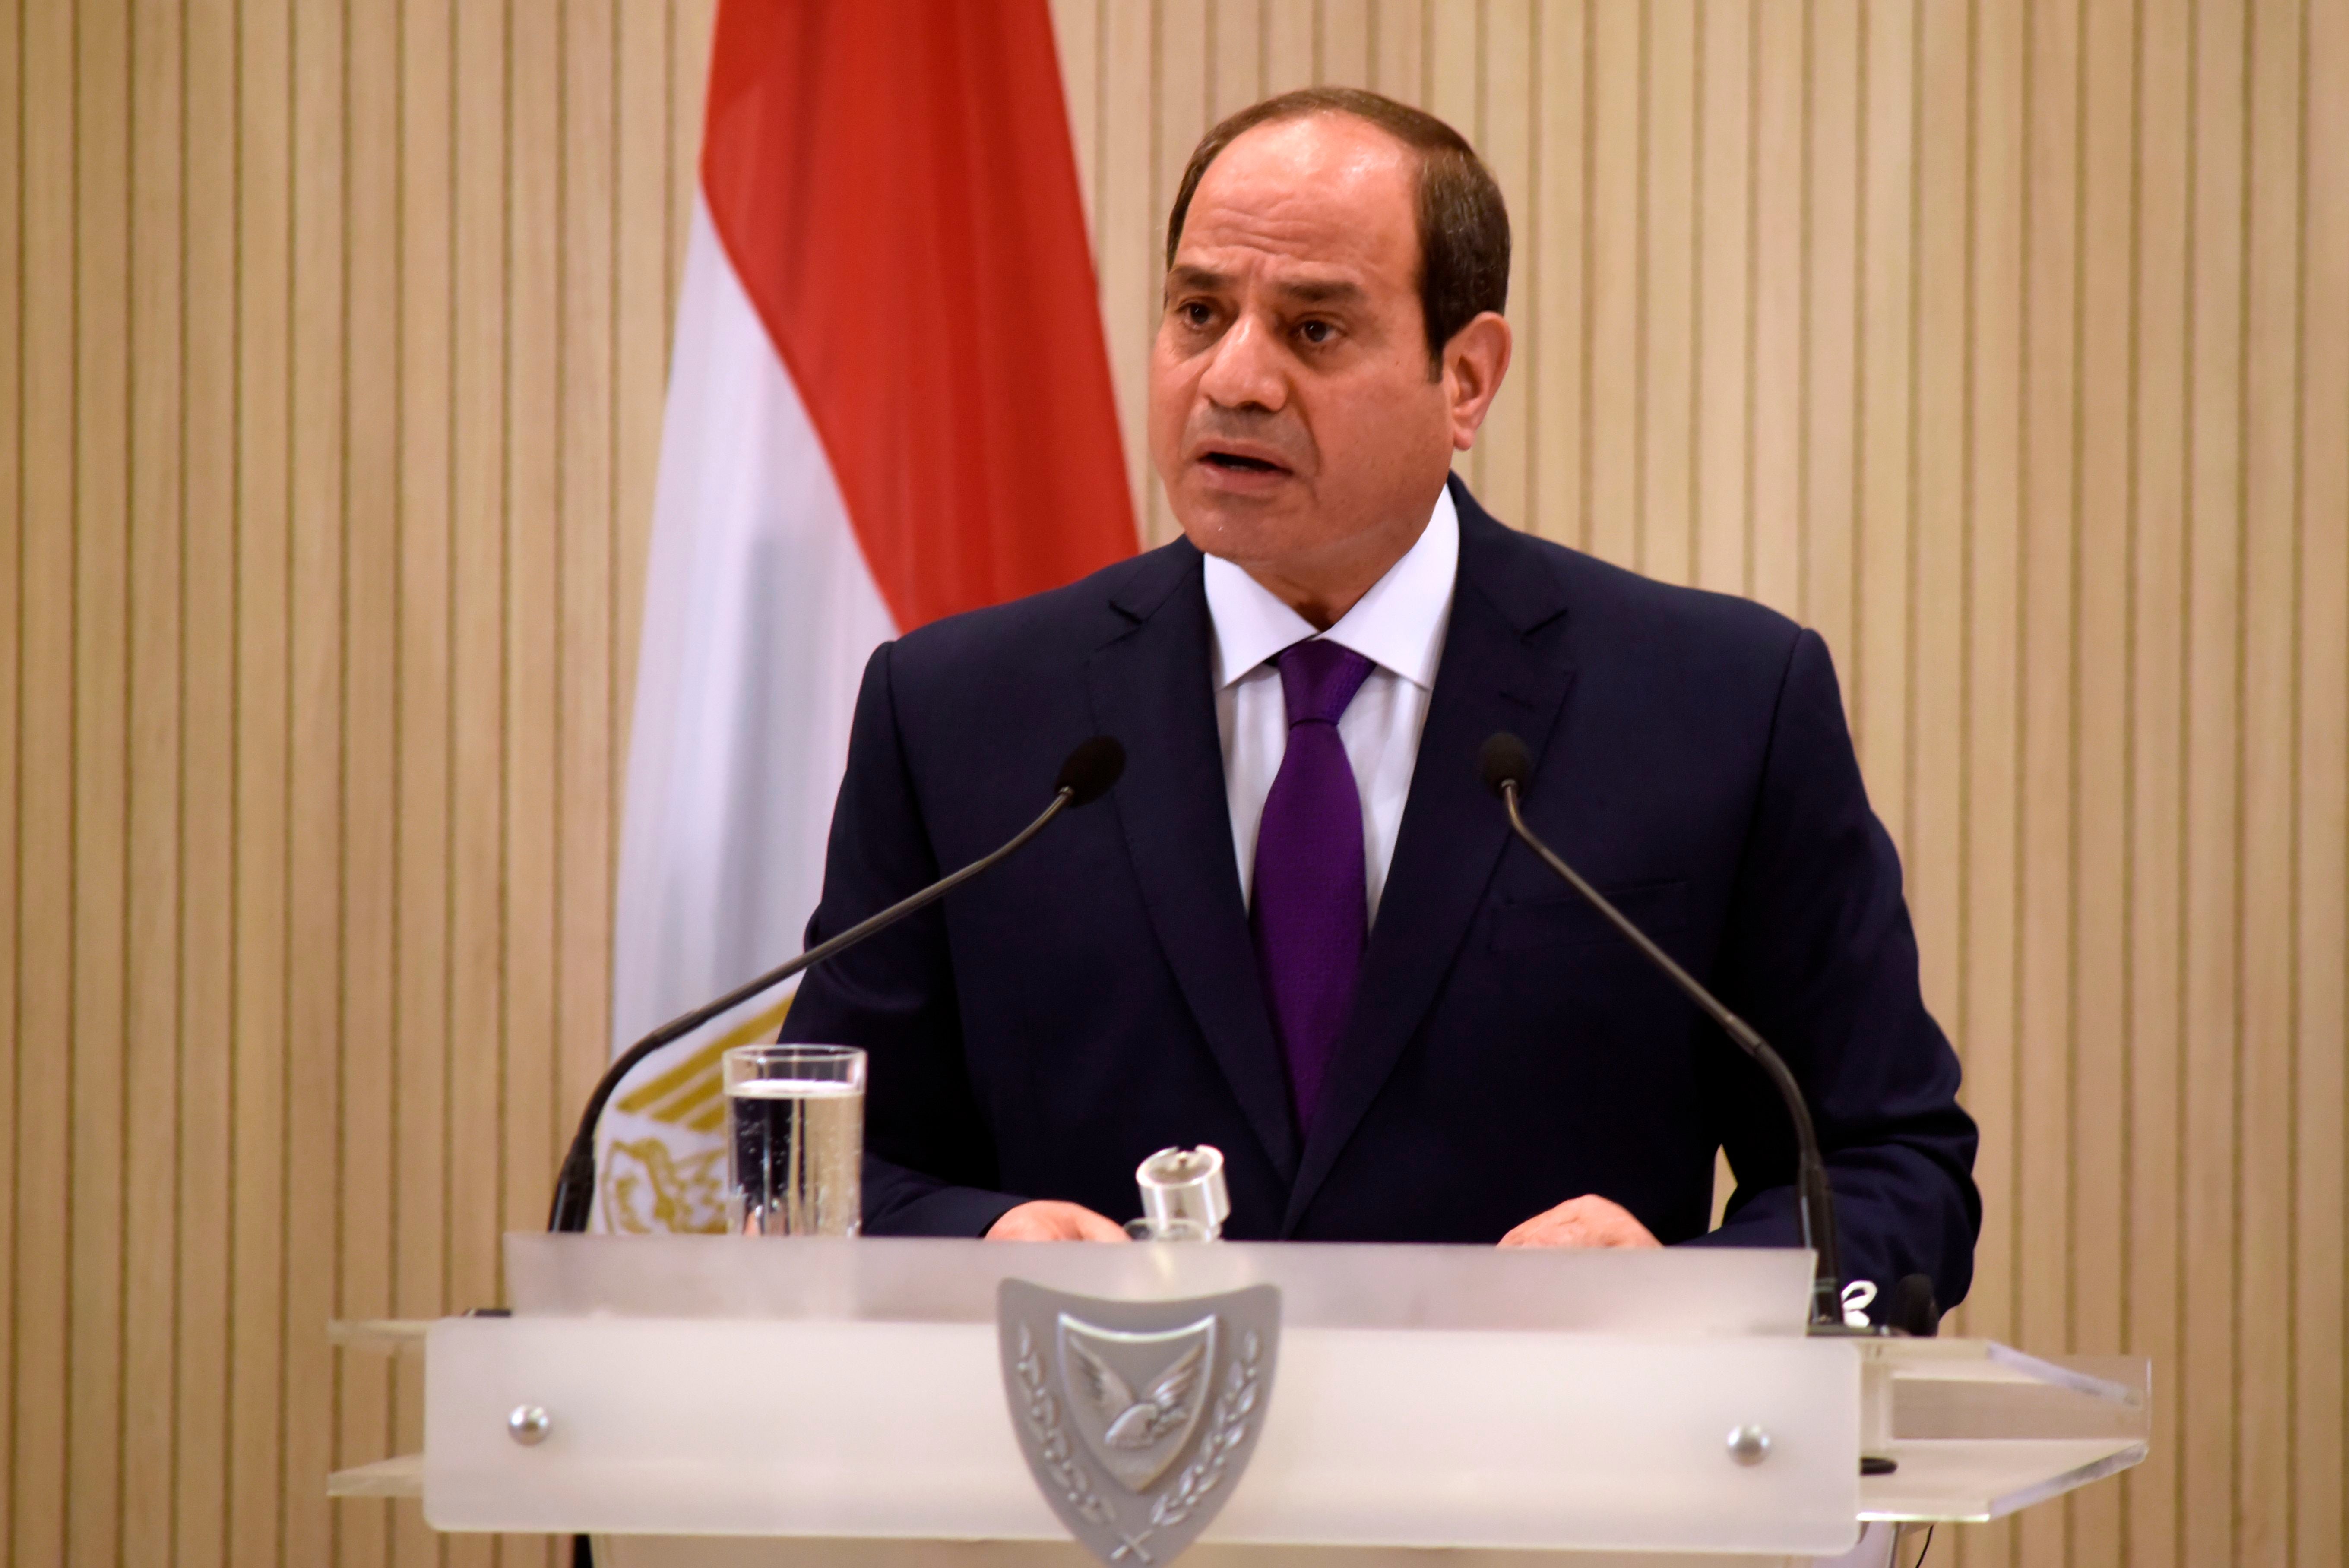 A fresh crackdown? Egyptian President Abdel Fattah al-Sisi (Photo by IAKOVOS HATZISTAVROU/POOL/AFP via Getty Images)